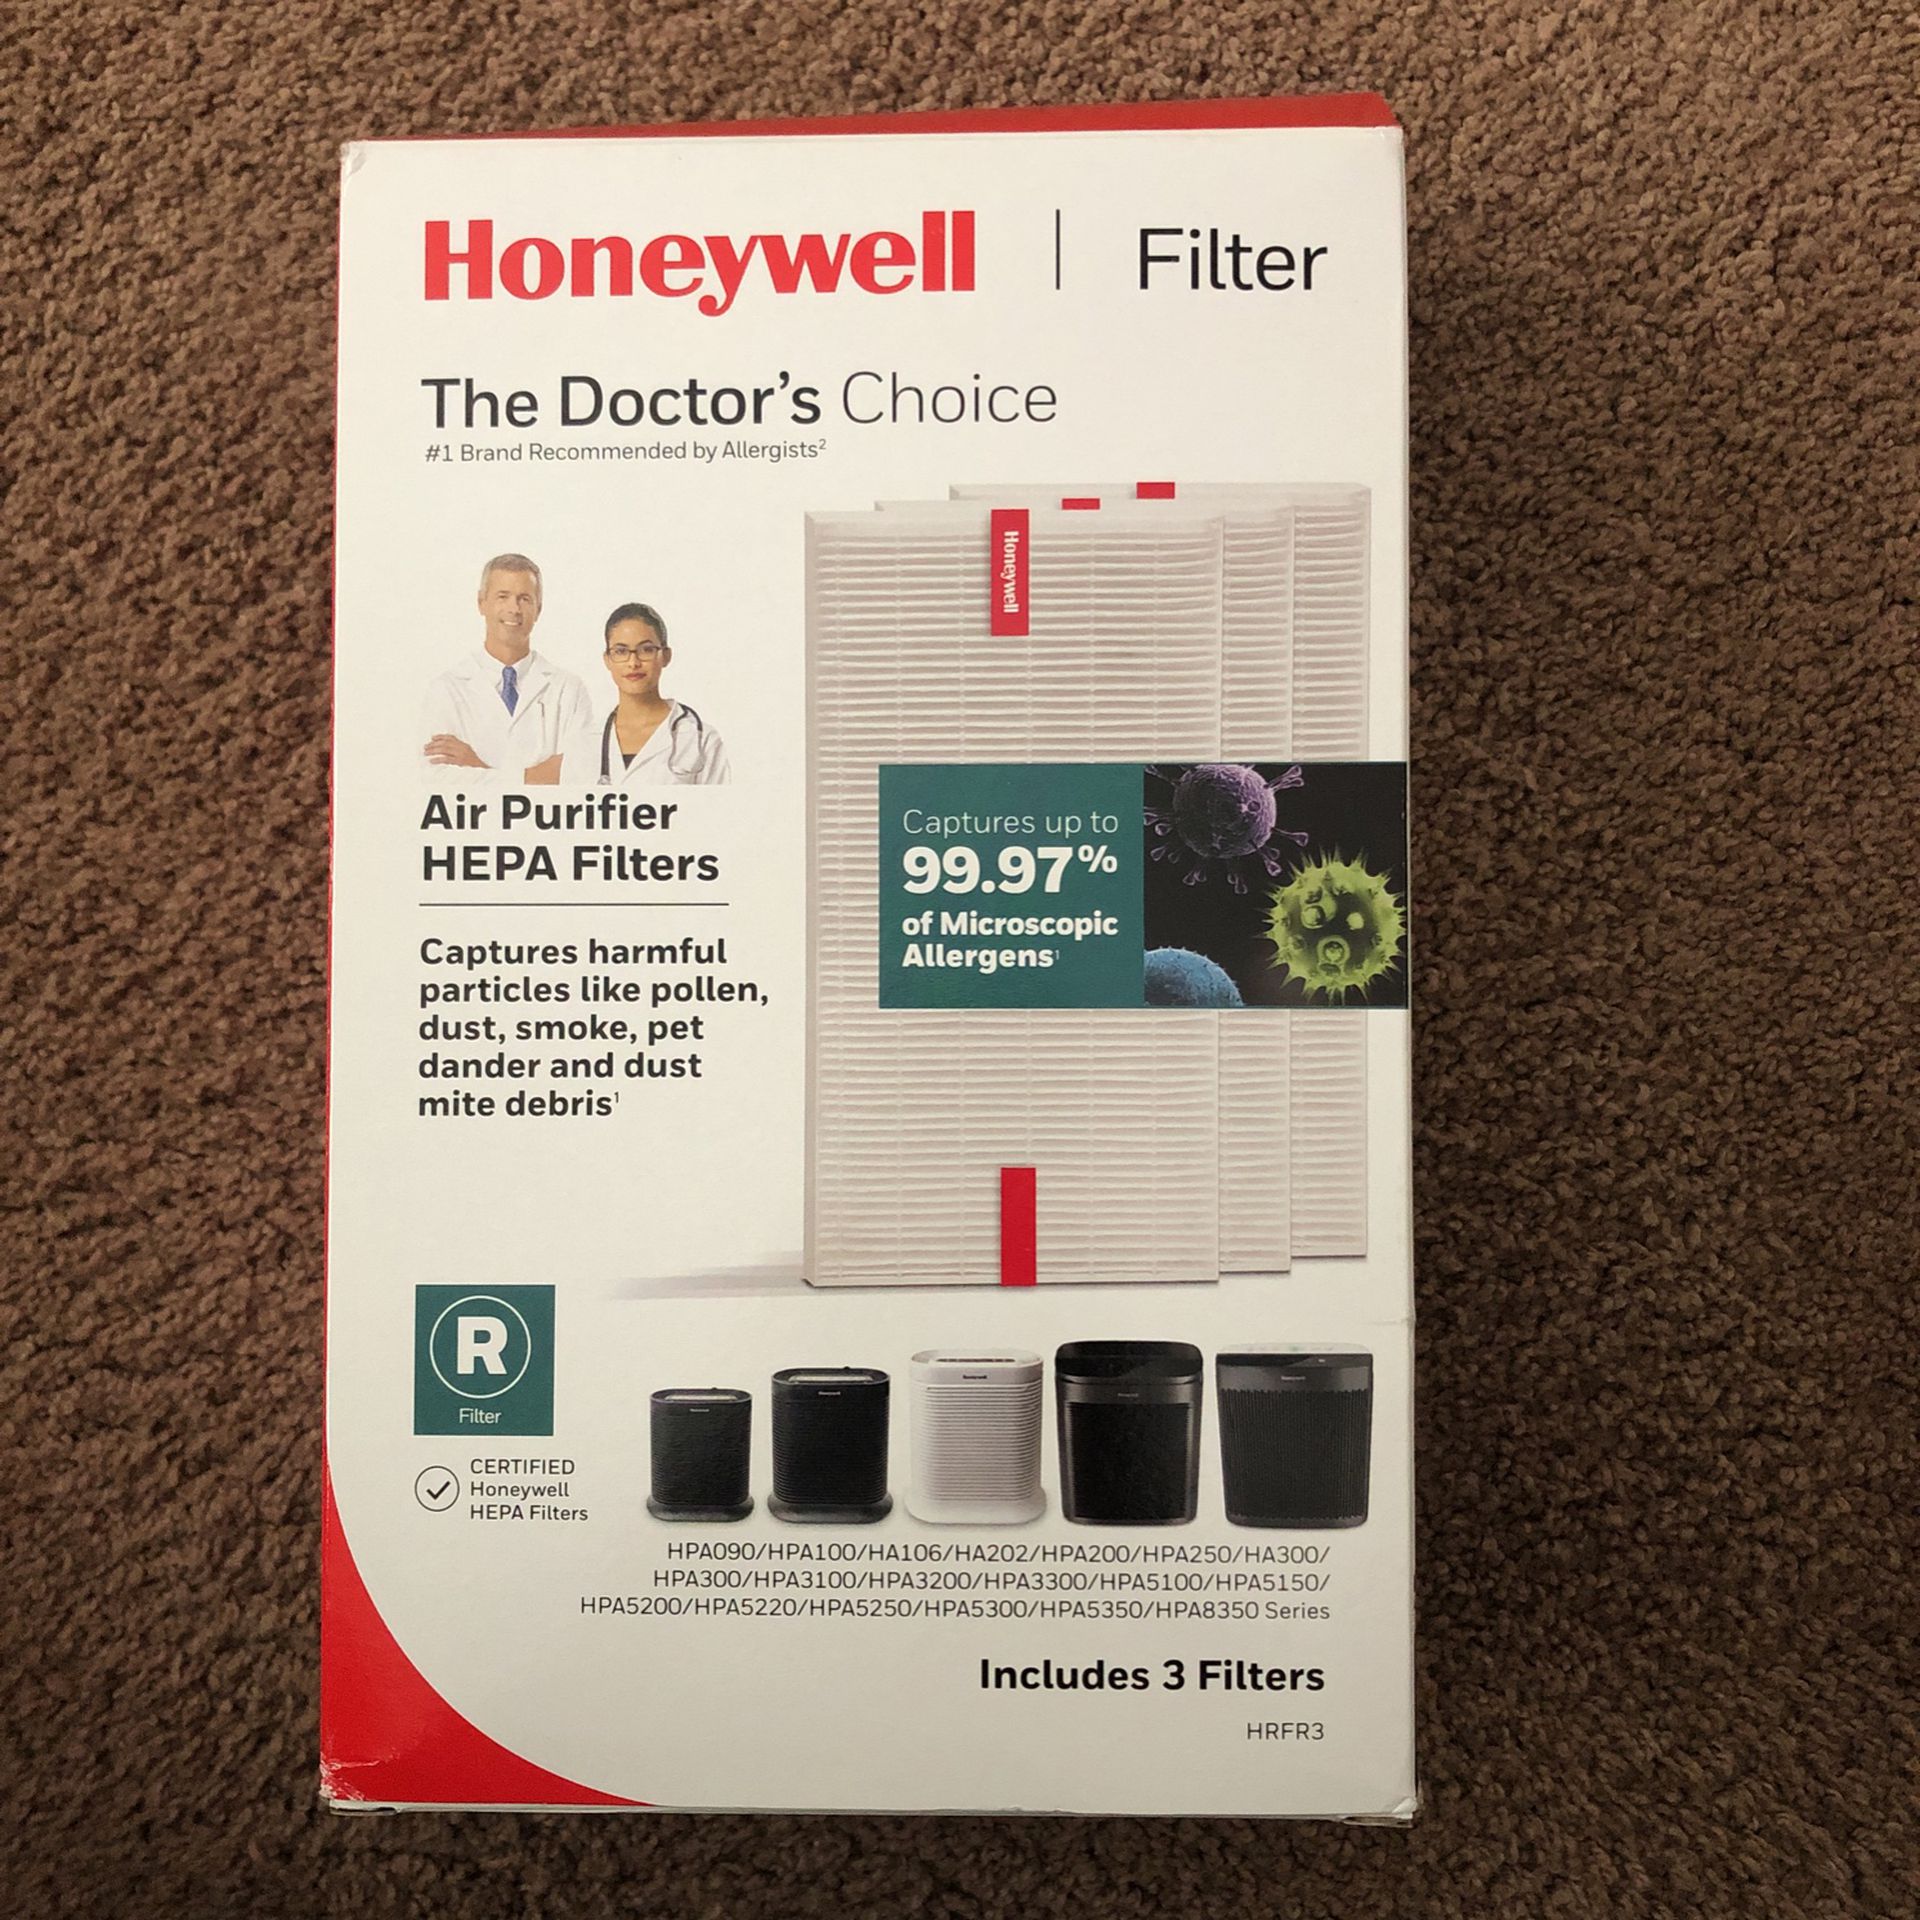 Honeywell air purifier, HEPA filters